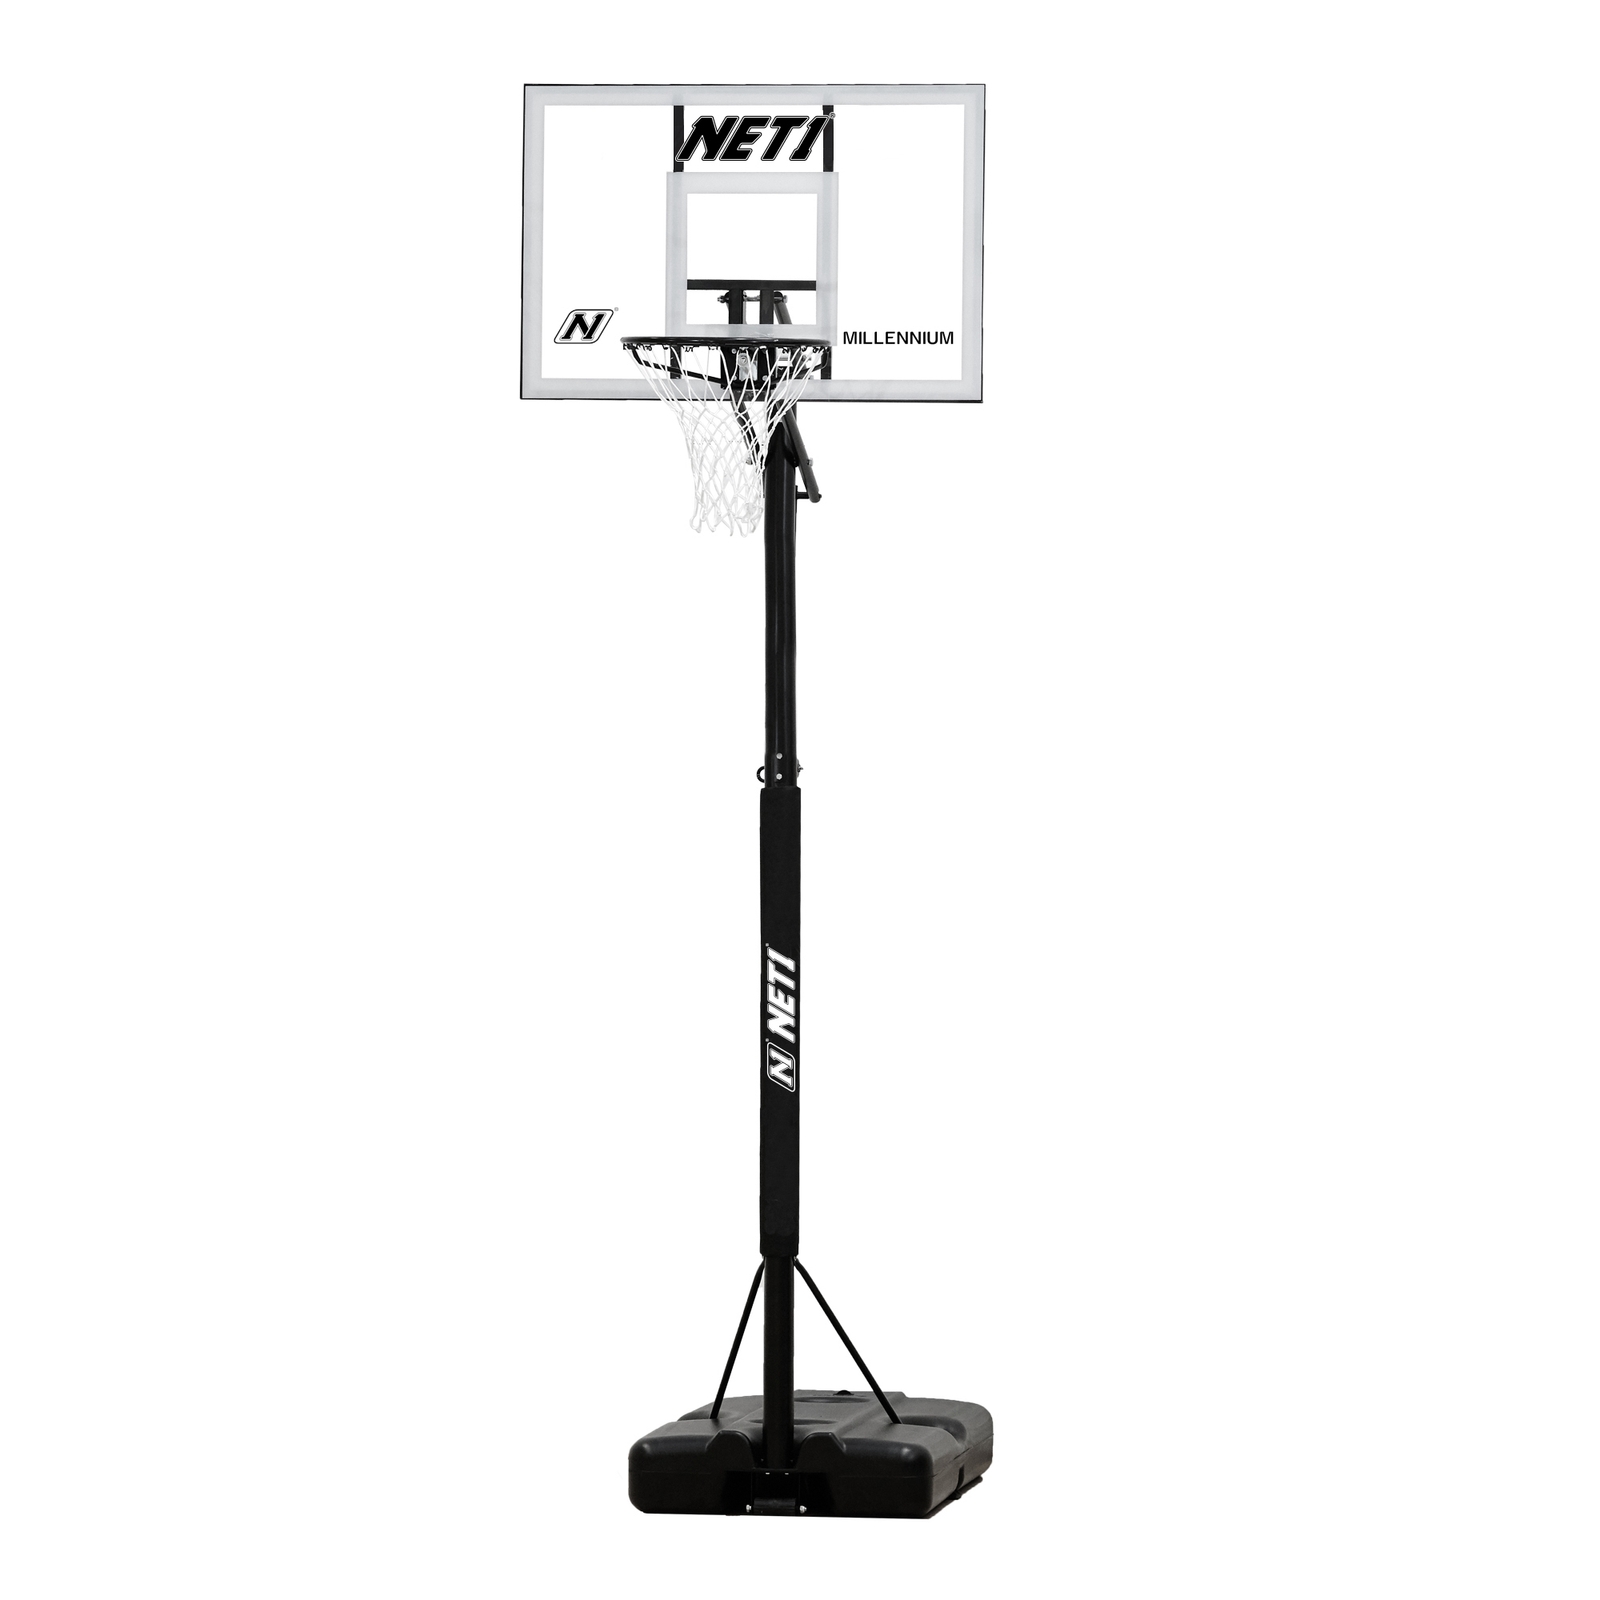 Millennium Portable Basketball System